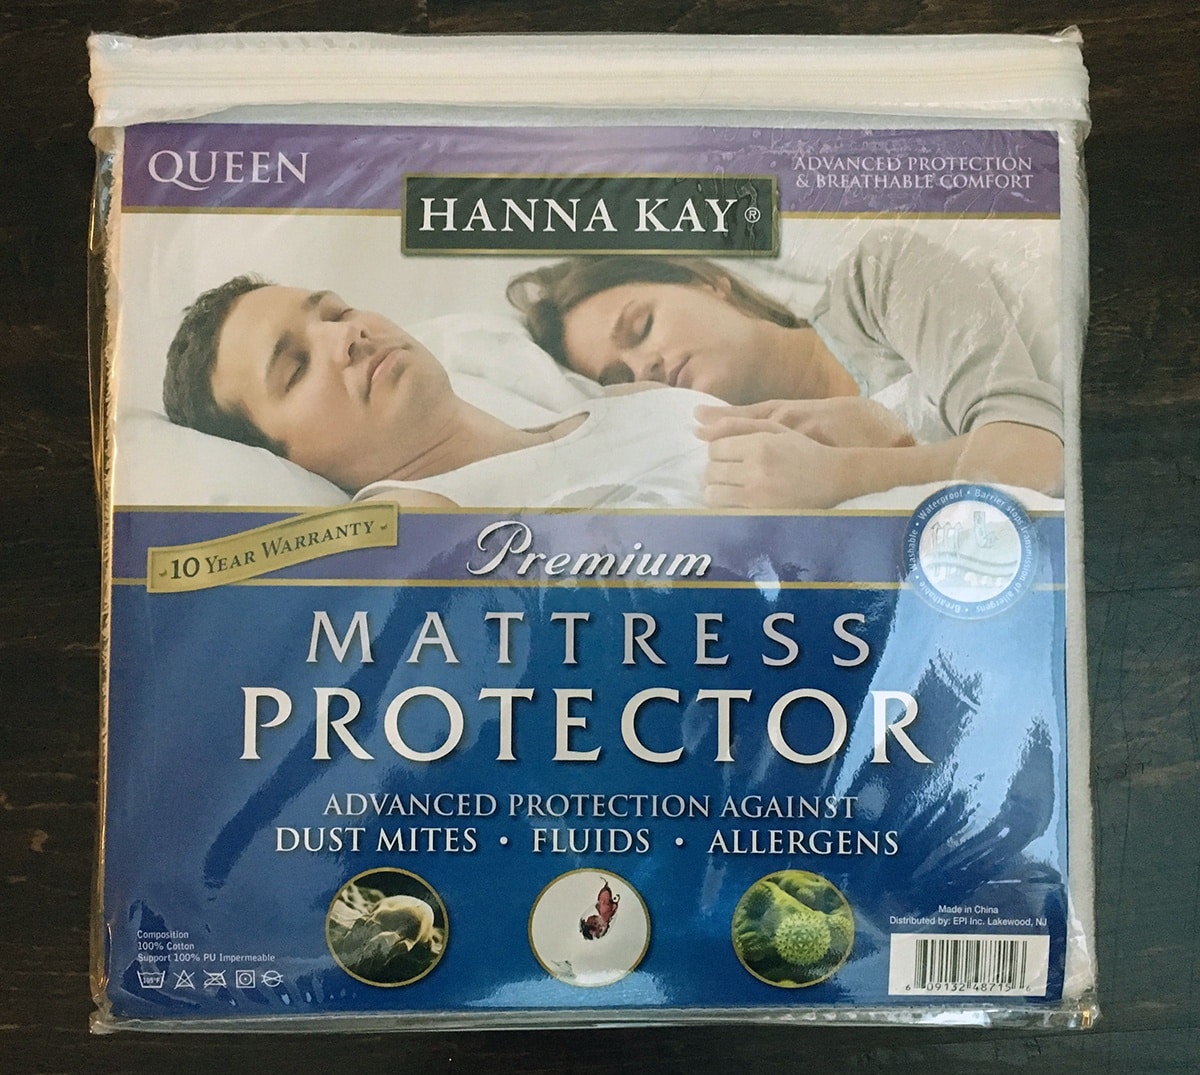 Hanna Kay Premium Mattress Protector Review